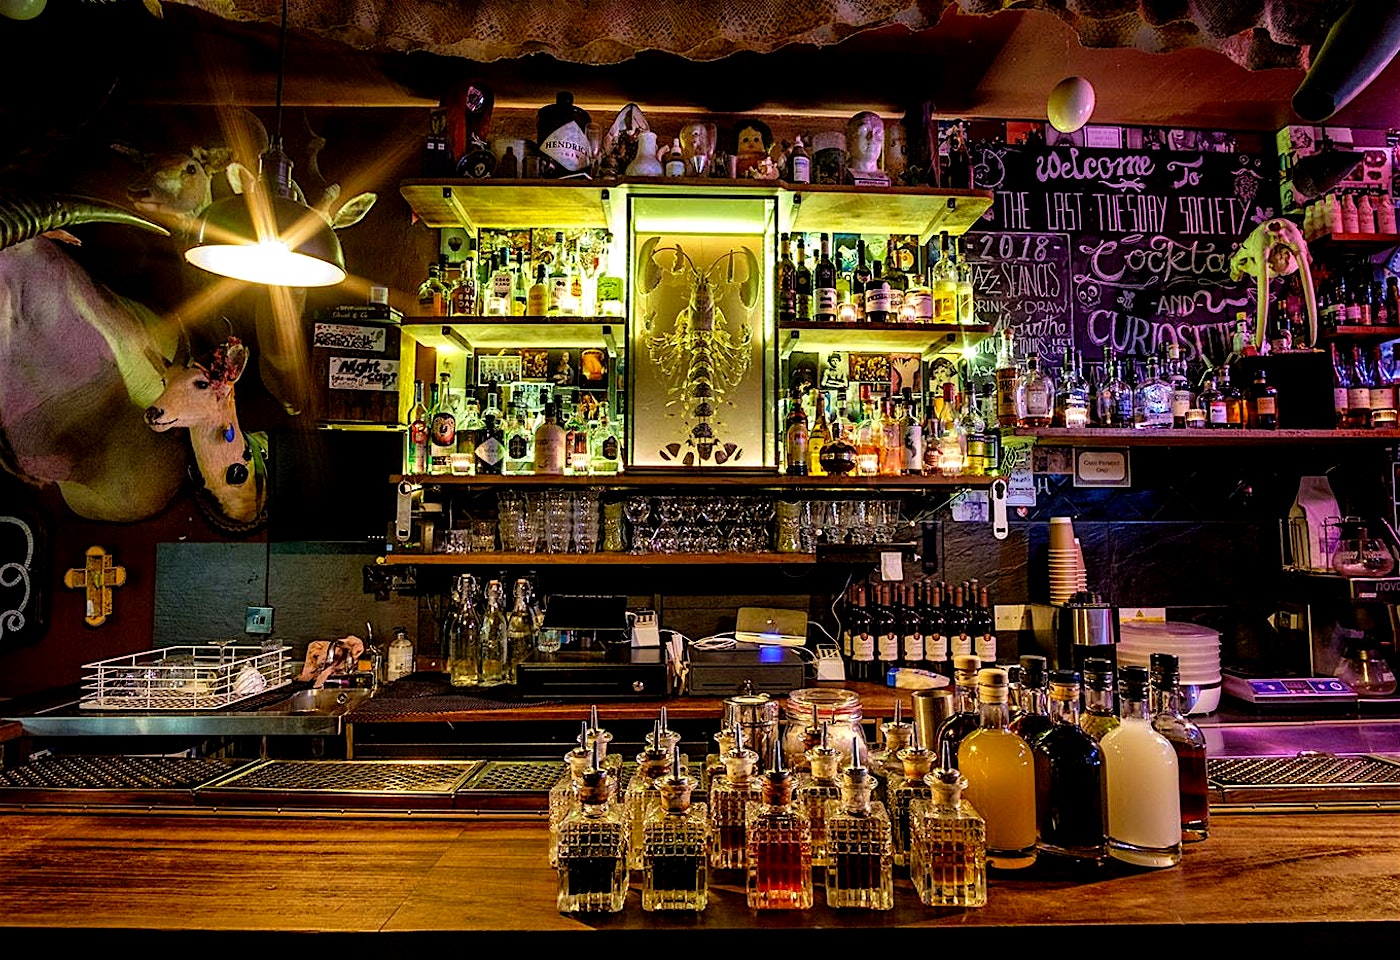 the-last-tuesday-society-absinthe-parlour-hackney-london-bar-interior-1